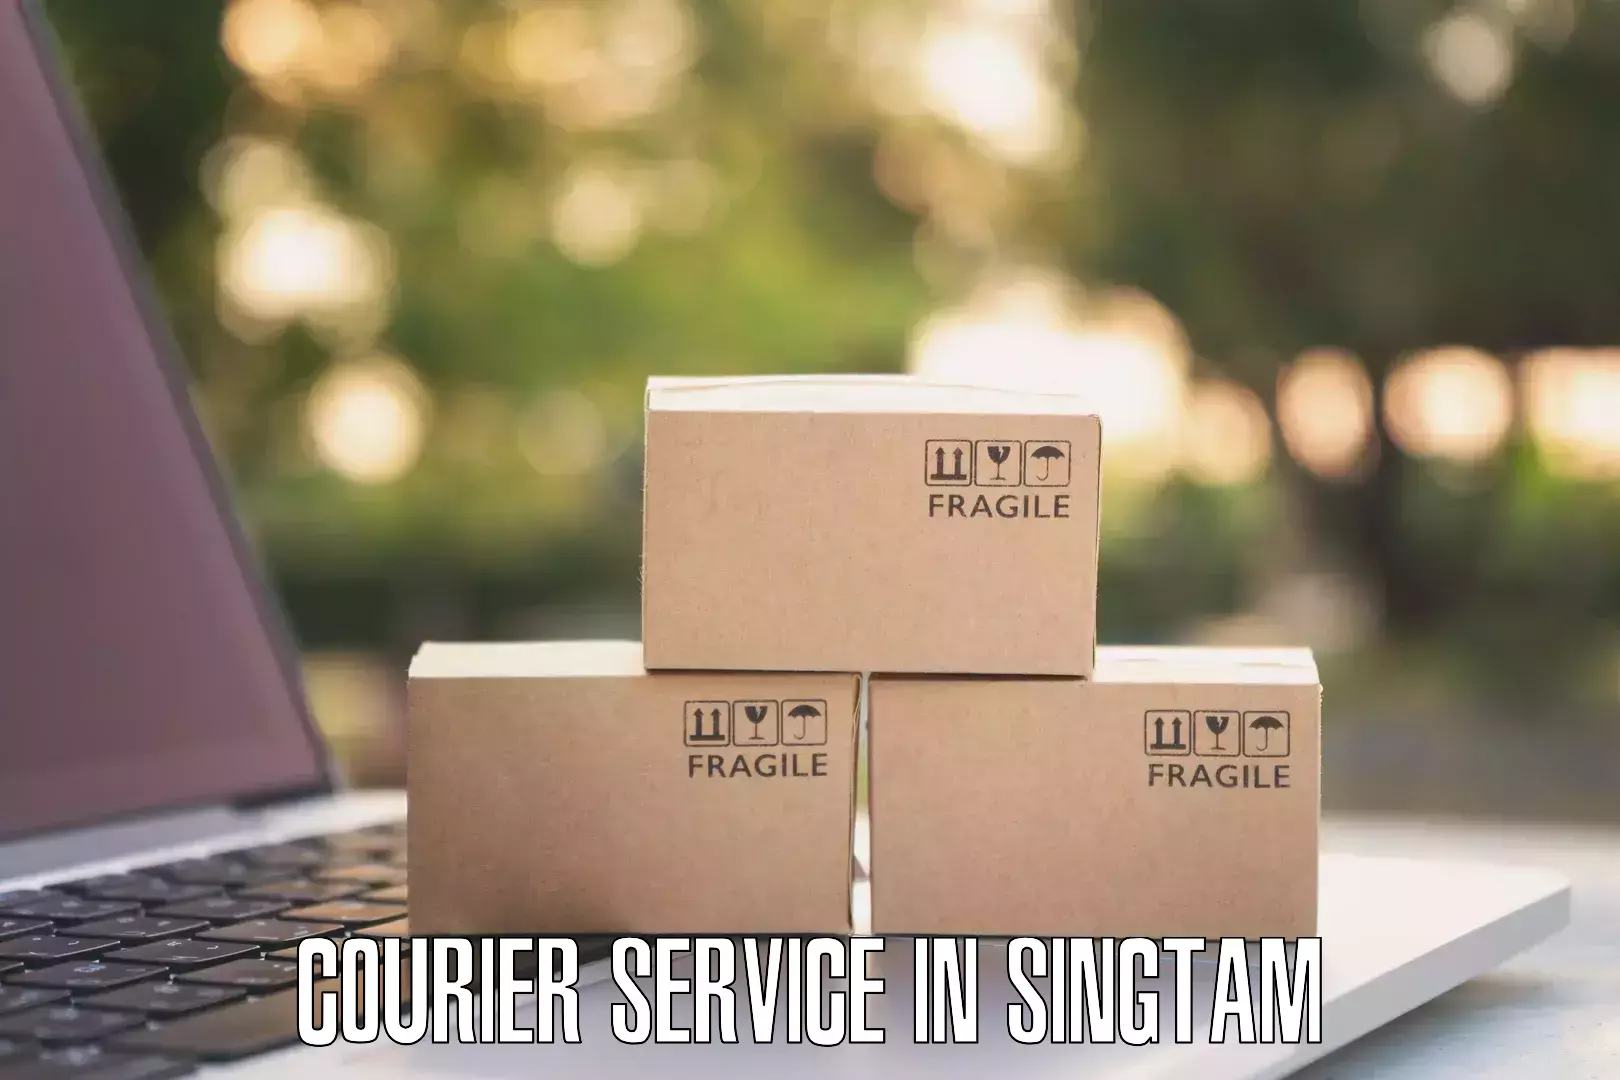 Express mail service in Singtam